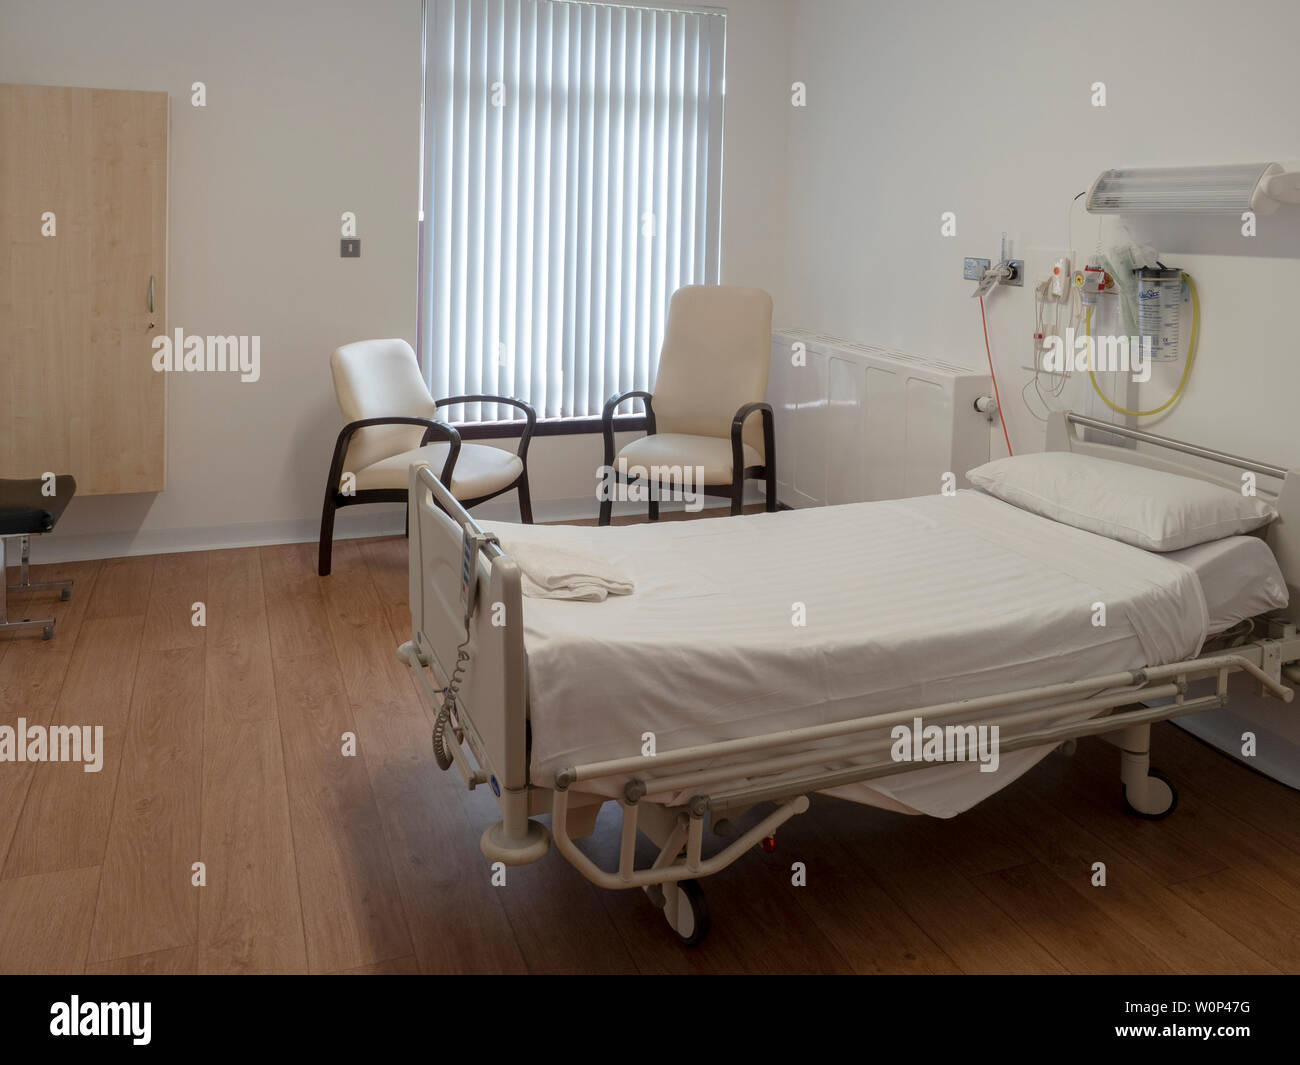 Leere Krankenhaus Bett im eigenen Zimmer Stockfoto